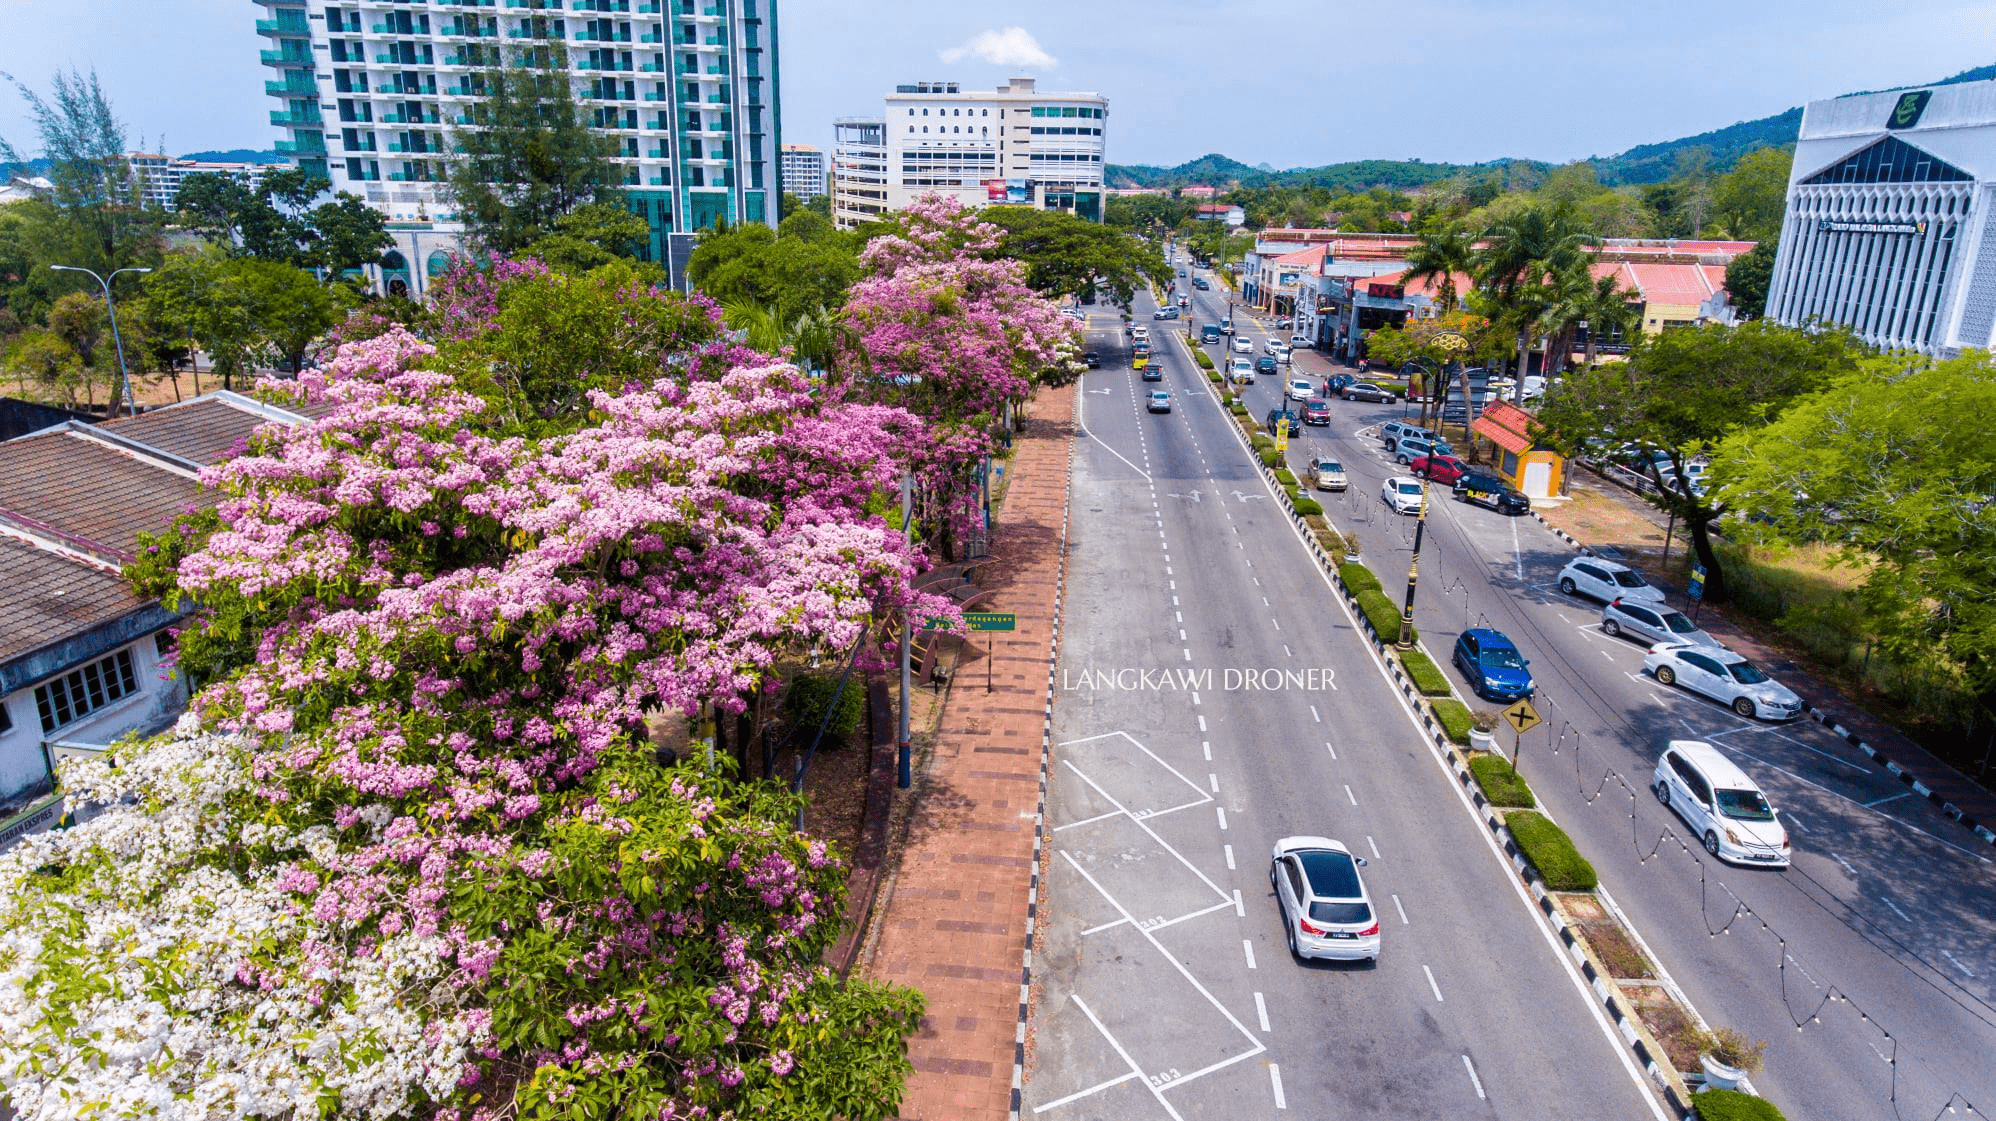 Tecome trees in full bloom in Malaysia - Langkawi